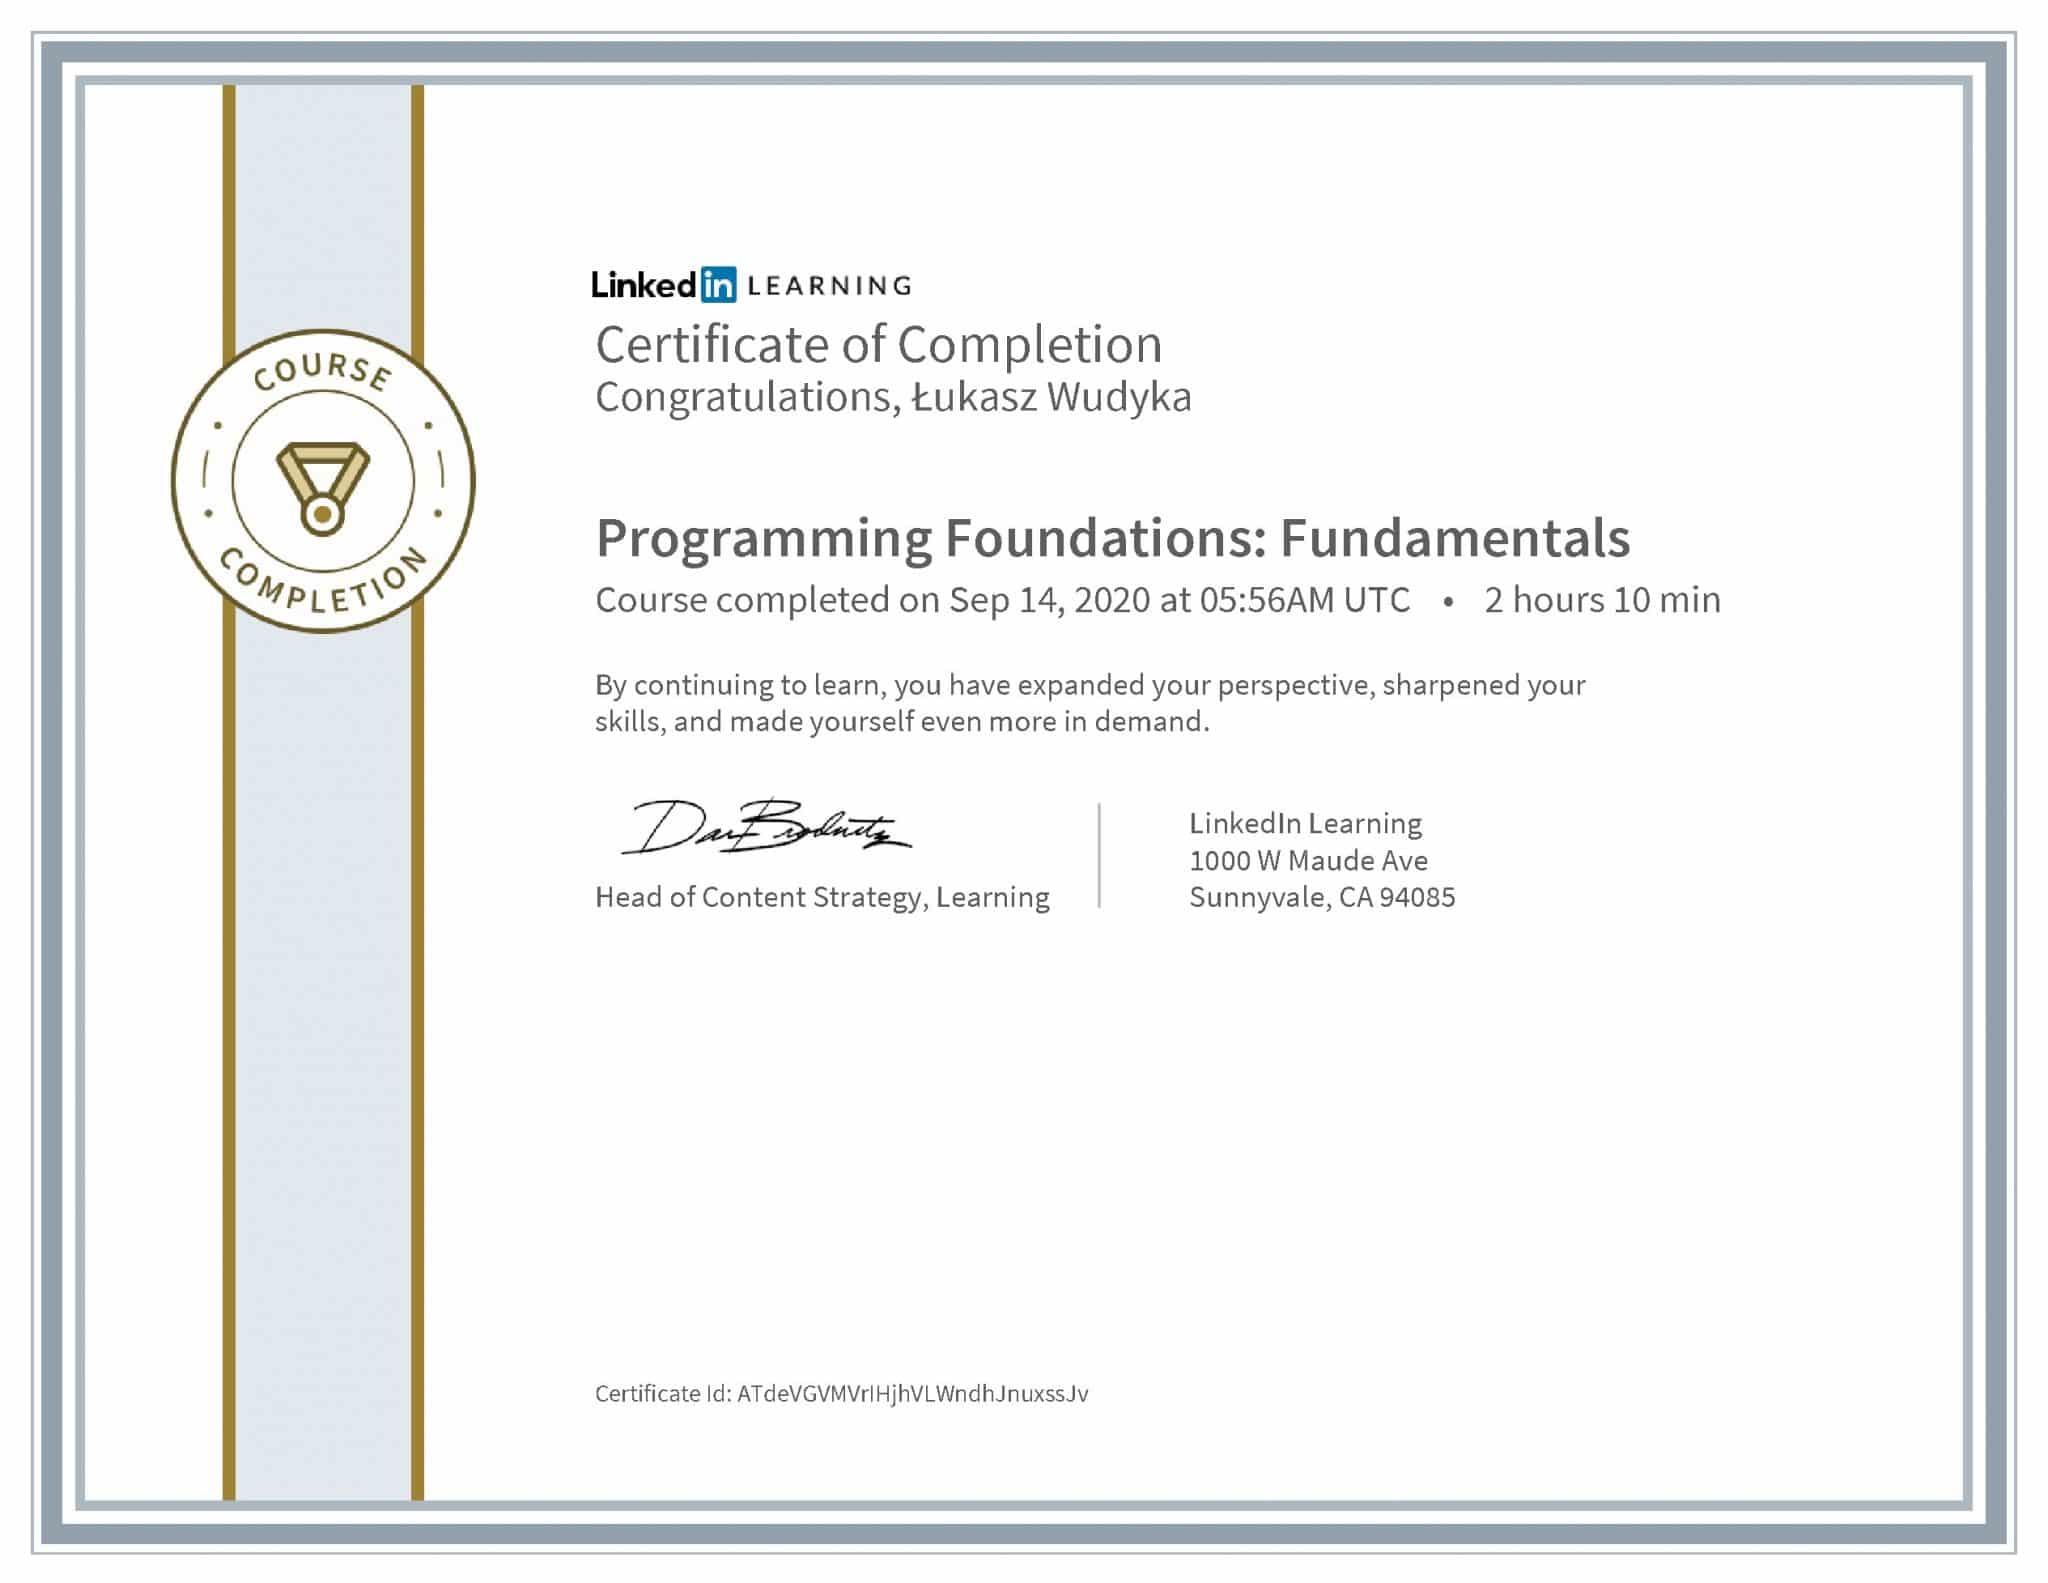 Łukasz Wudyka certyfikat LinkedIn Programming Foundations: Fundamentals